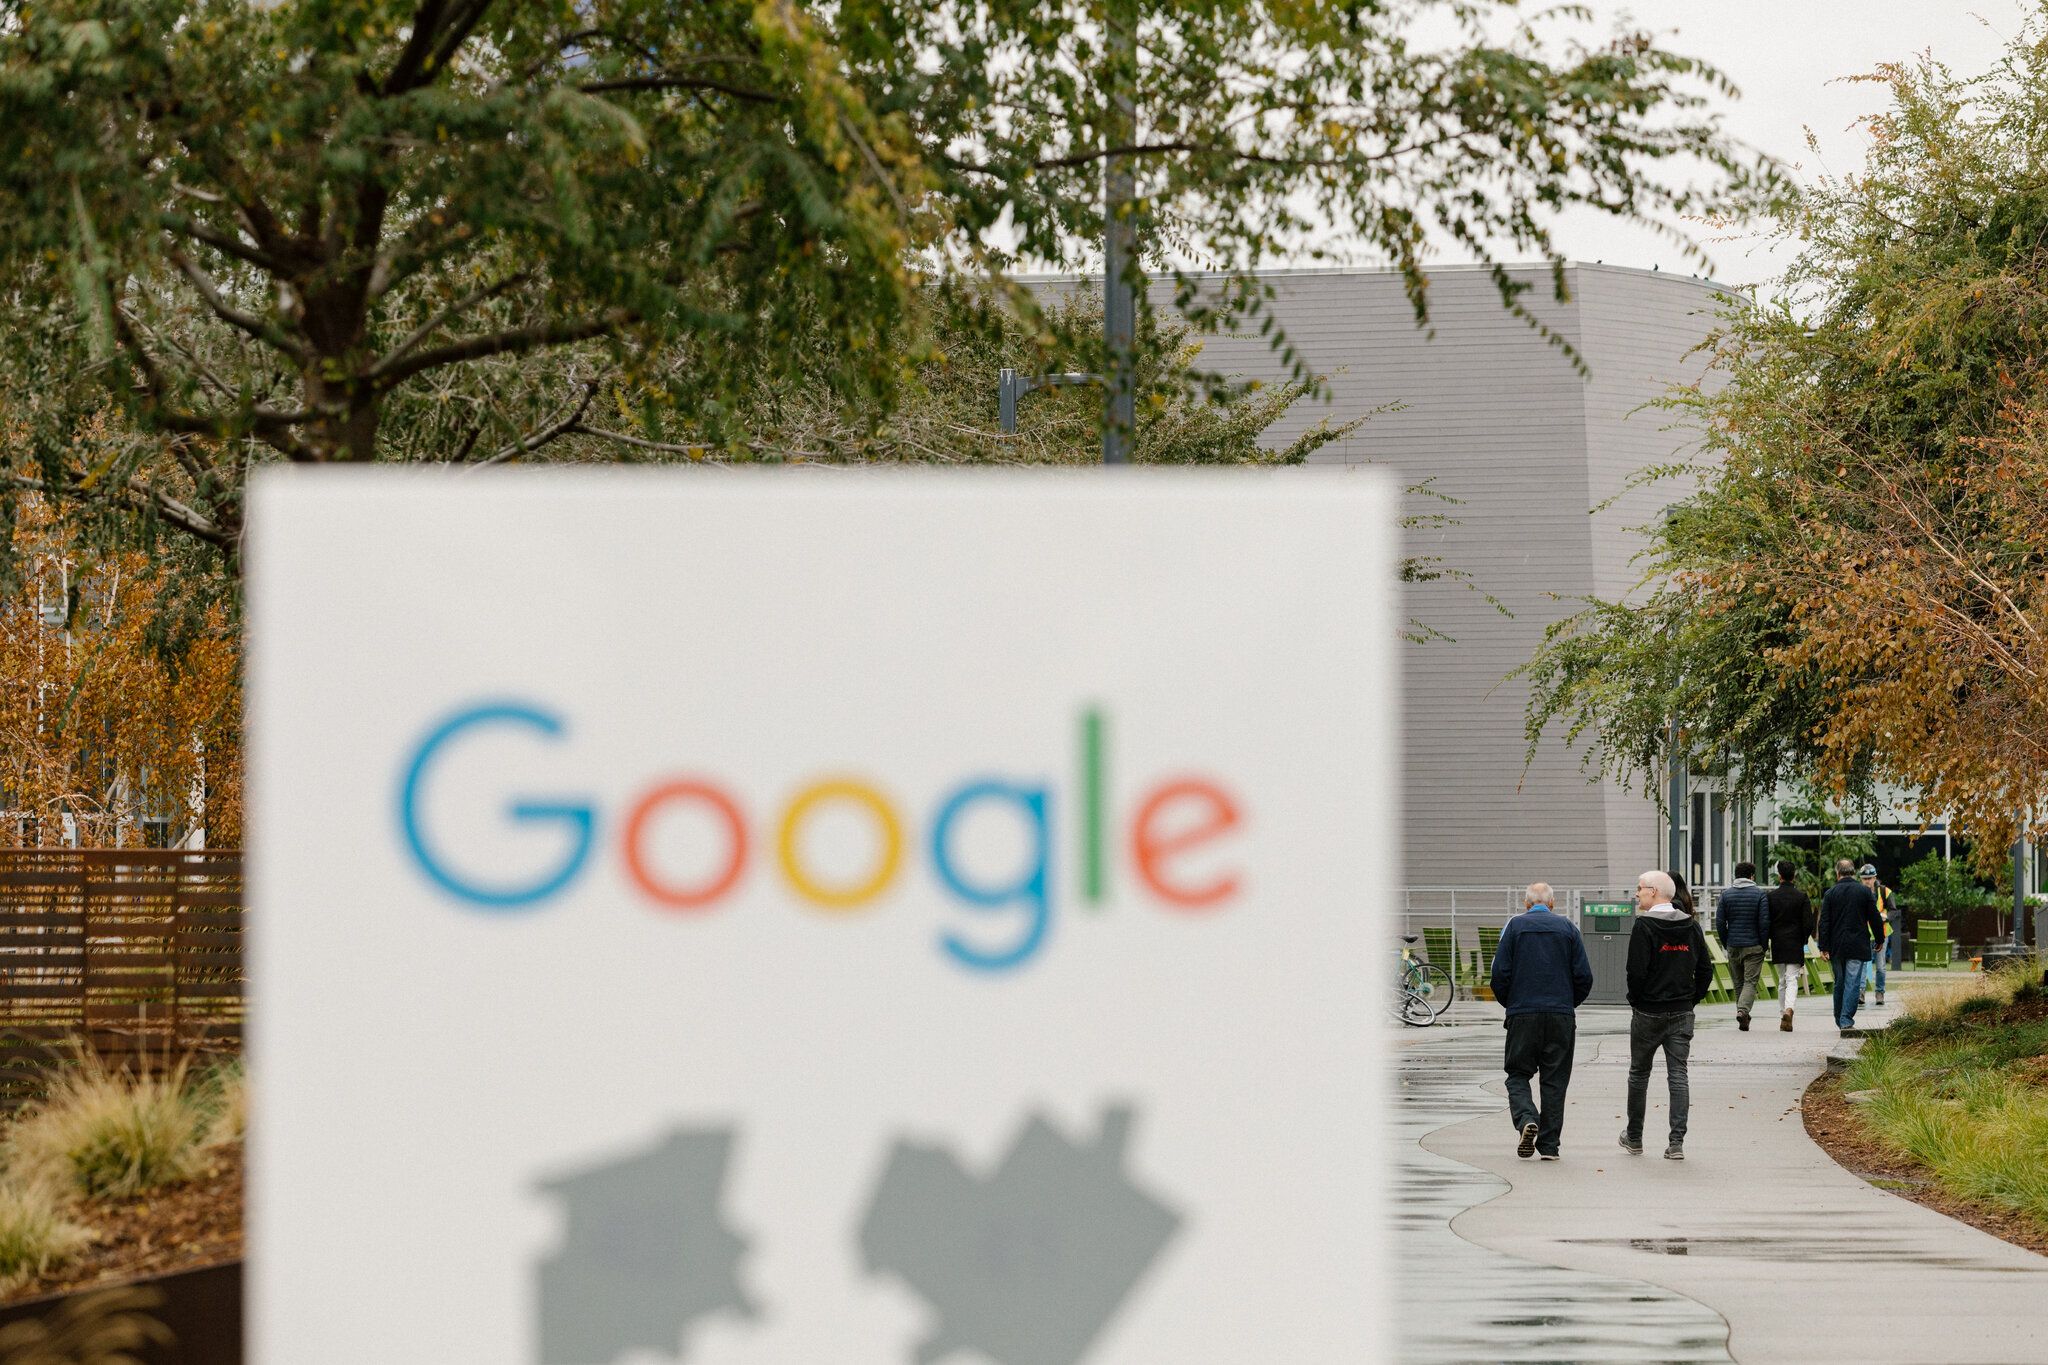 Google วางแผนตั้งโรงงานผลิตเพิ่มใน Silicon Valley พร้อมสู้ศึก Hardware Products